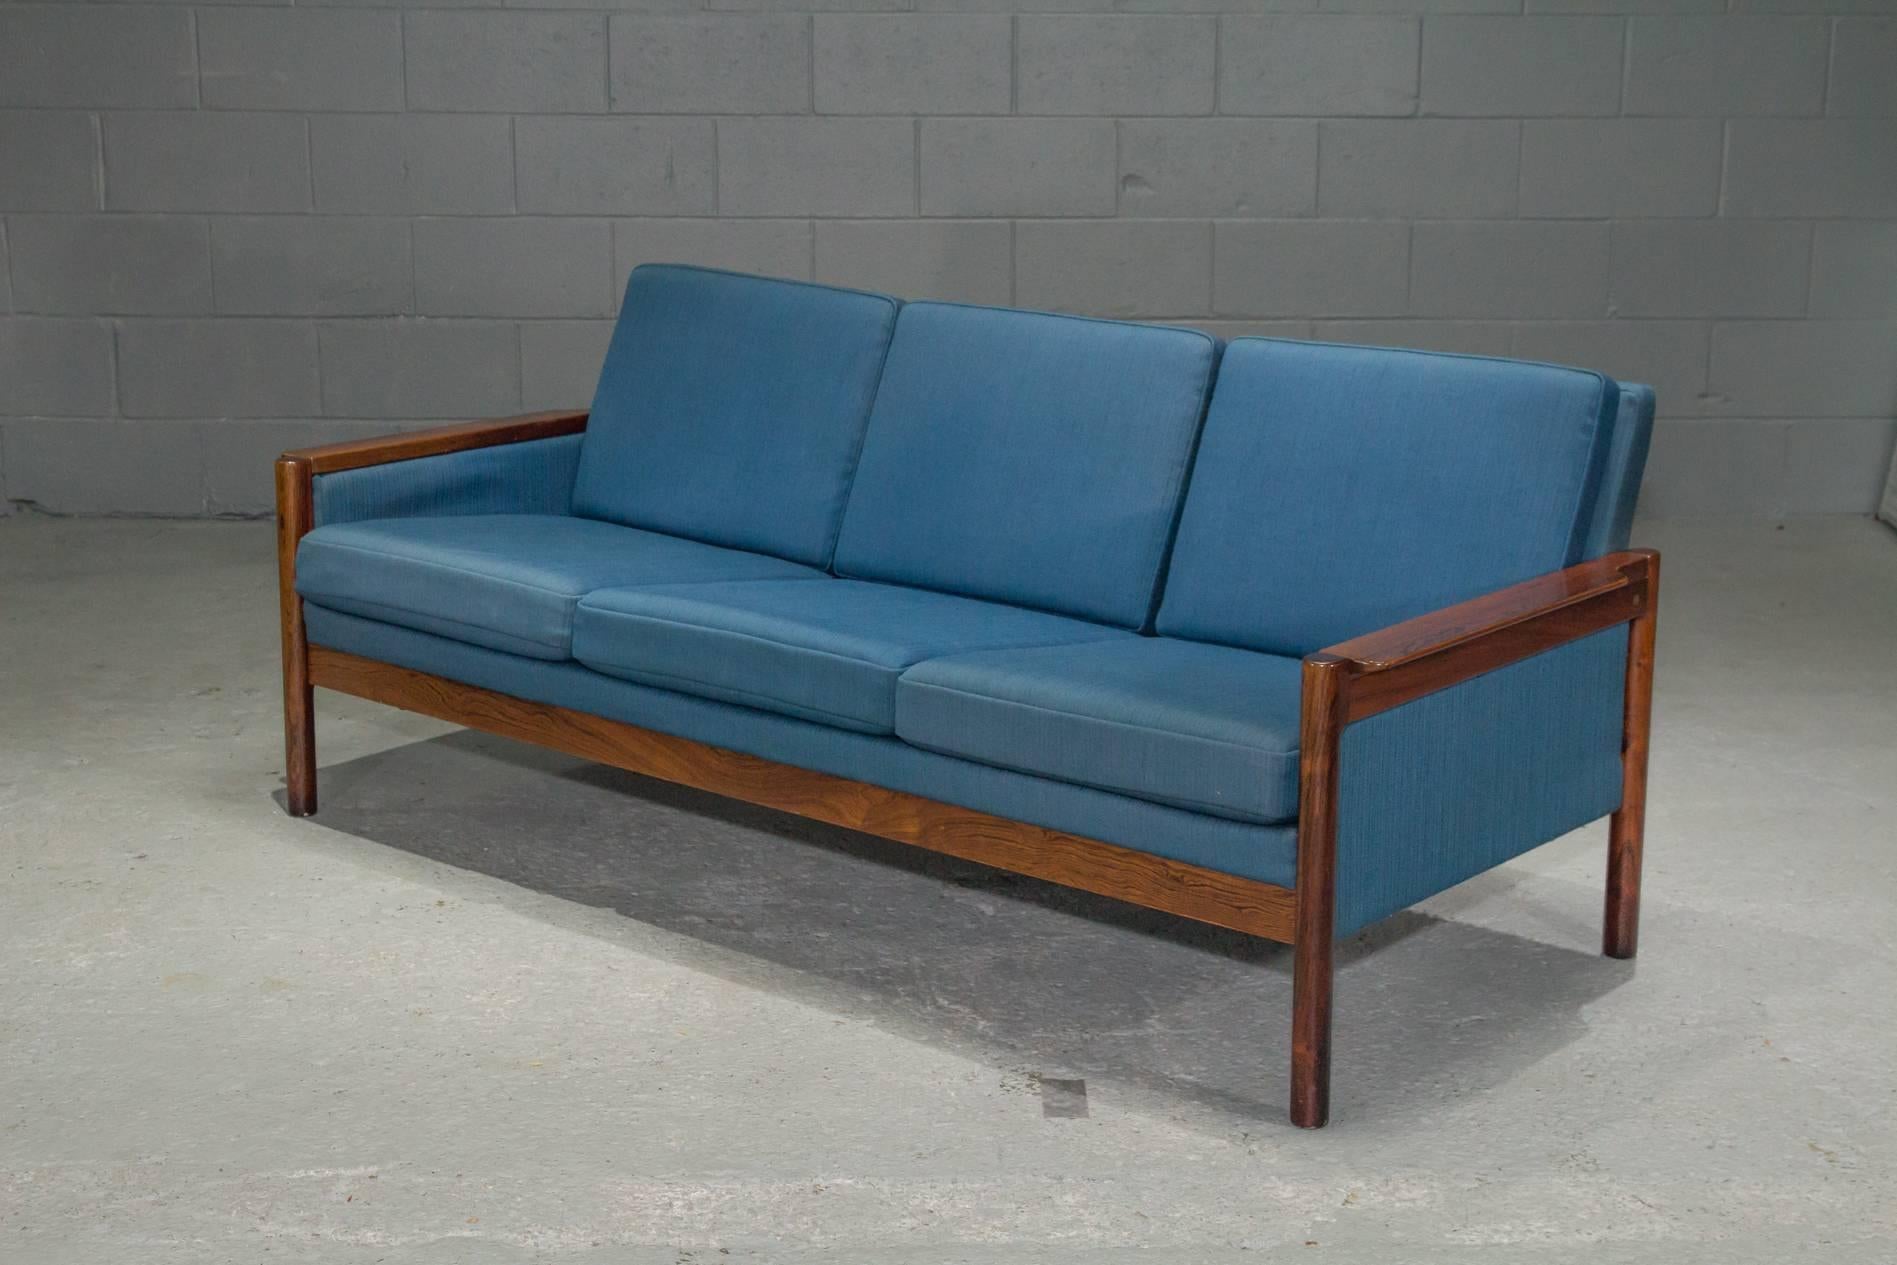 20th Century Three-Seat Danish Modern Rosewood Sofa with Blue Textile